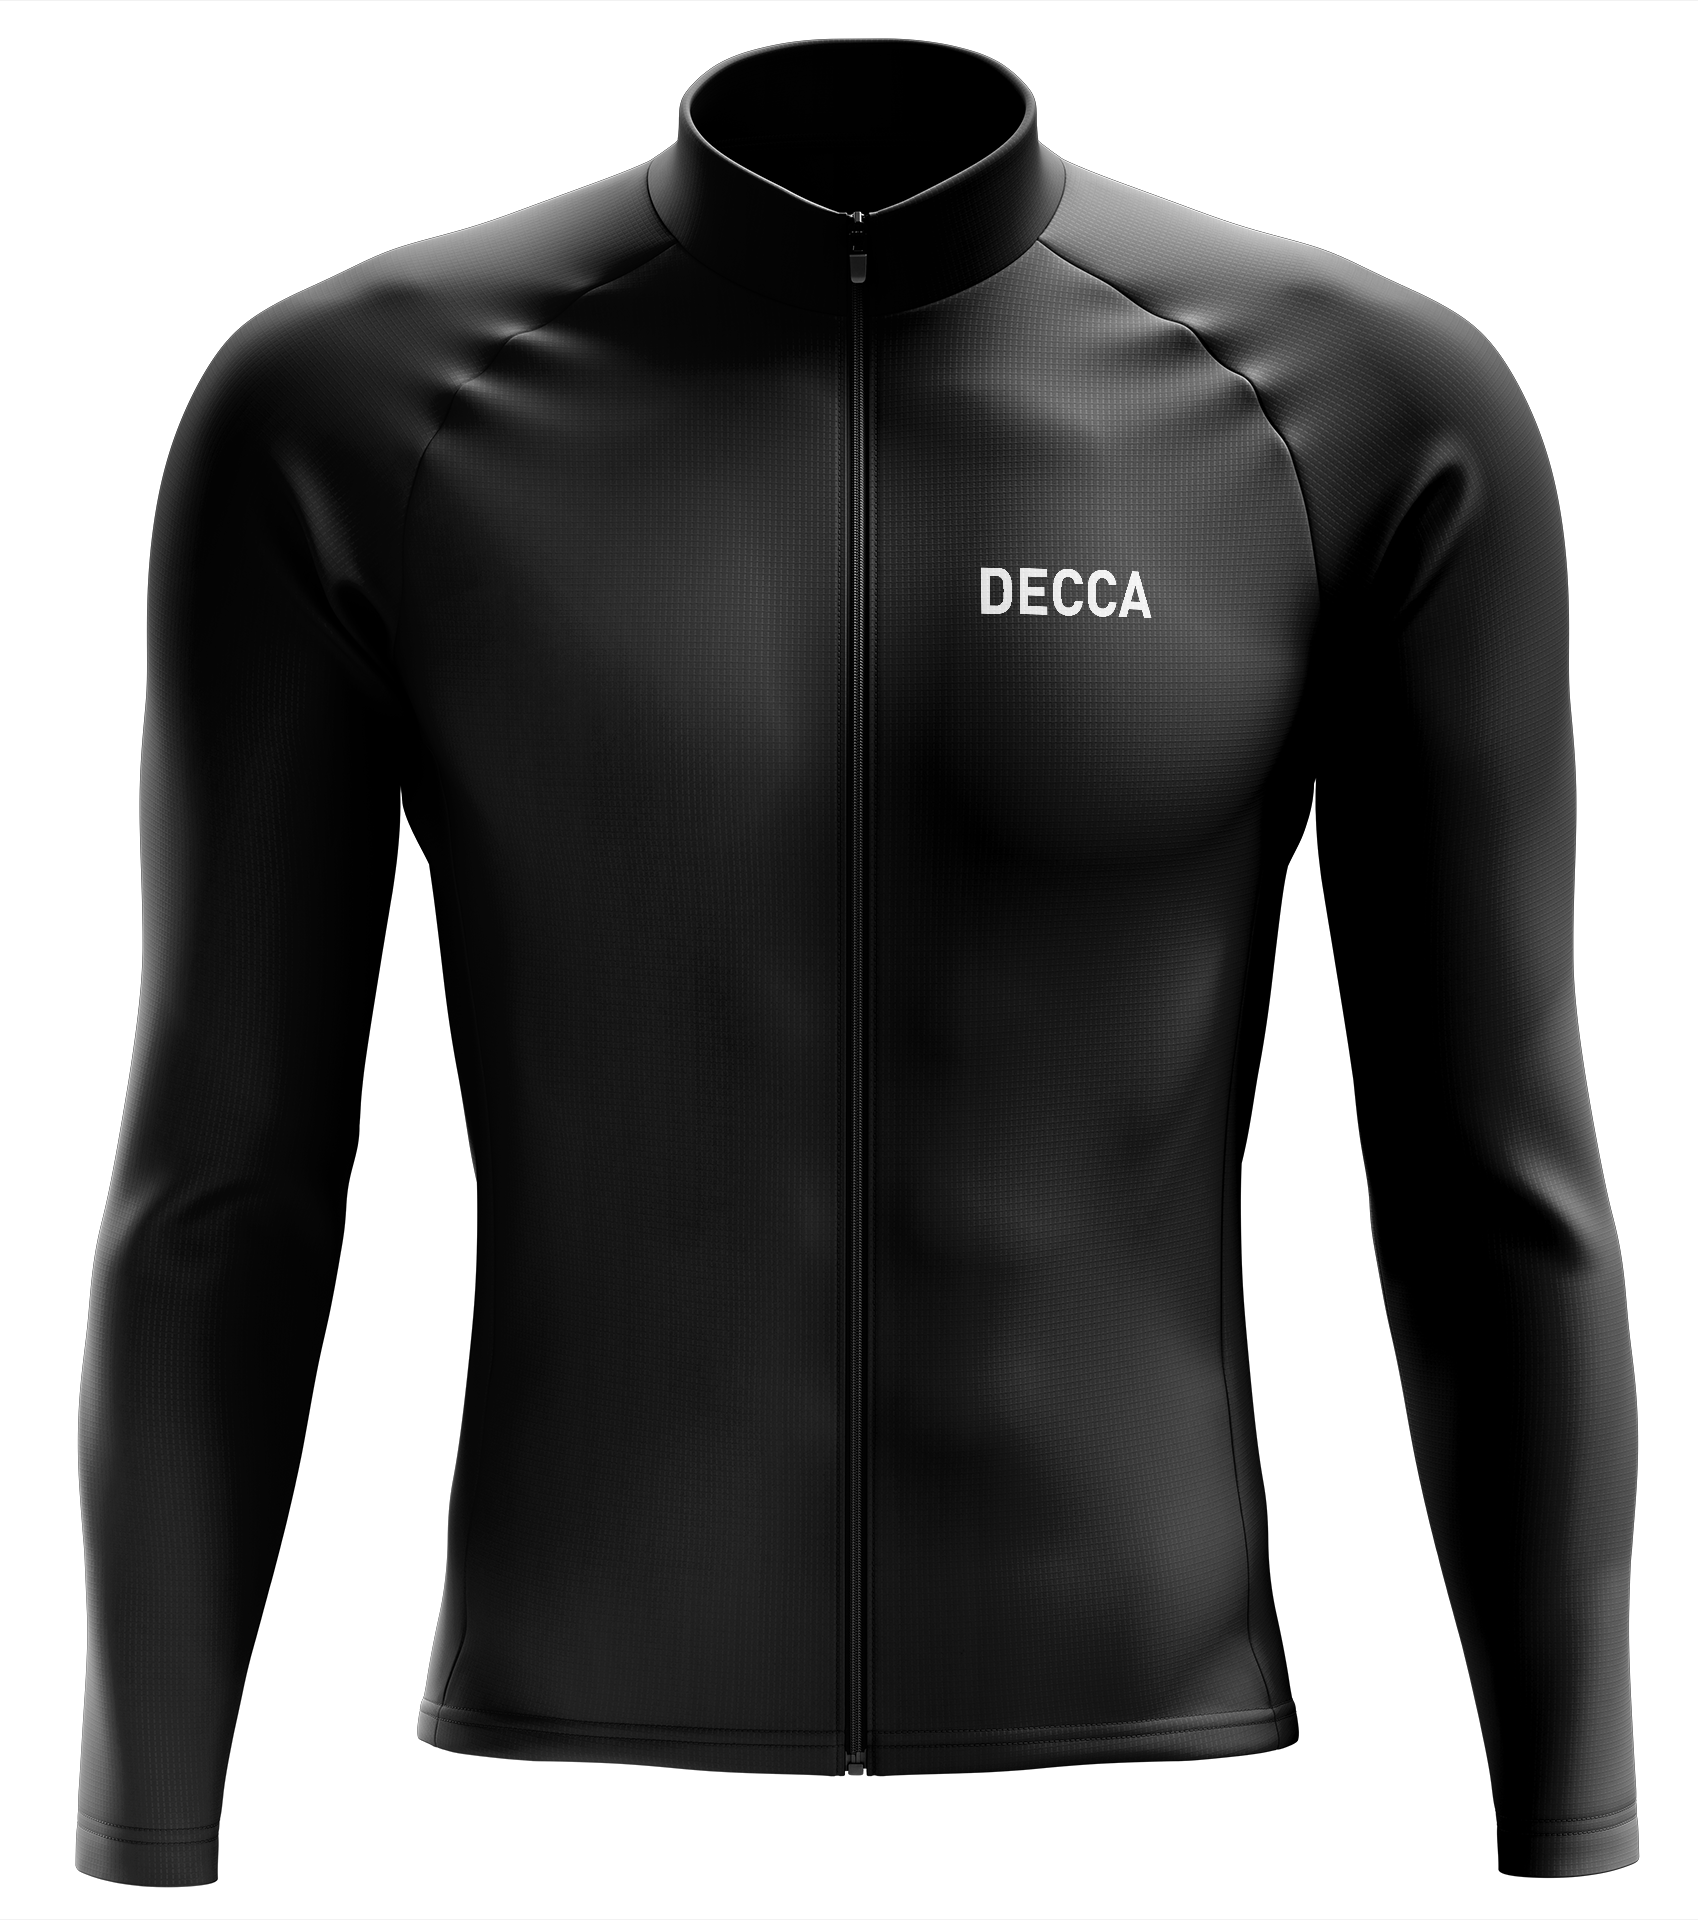 Ultimate Black Cycling Jersey Long Sleeves | DECCA custom ...